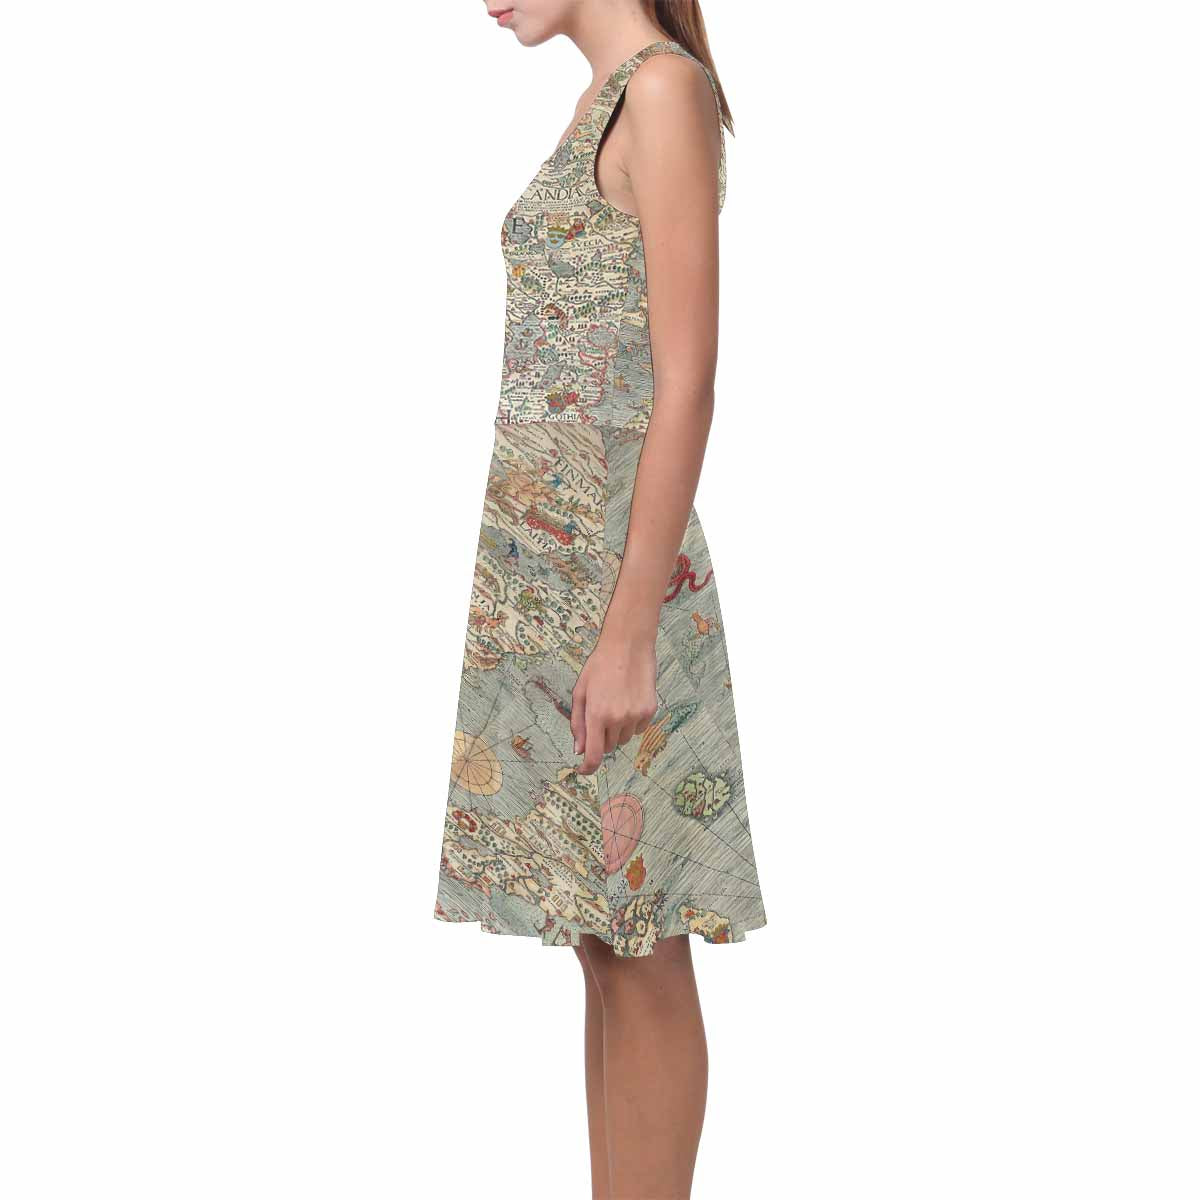 Antique Map casual summer dress, MODEL 09534, design 07